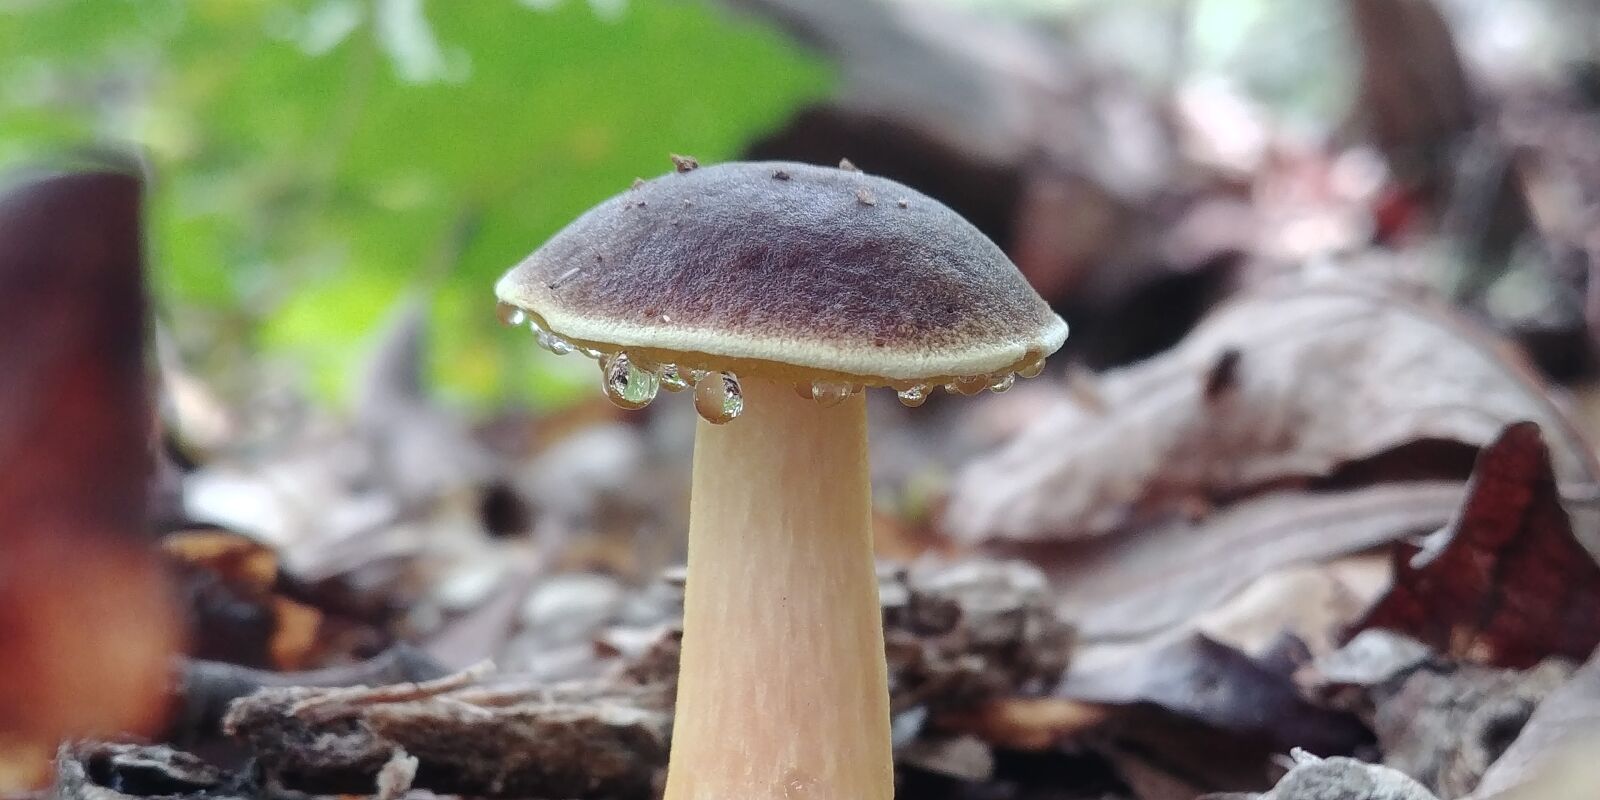 LG G6 sample photo. Mushroom, fungi, nature photography